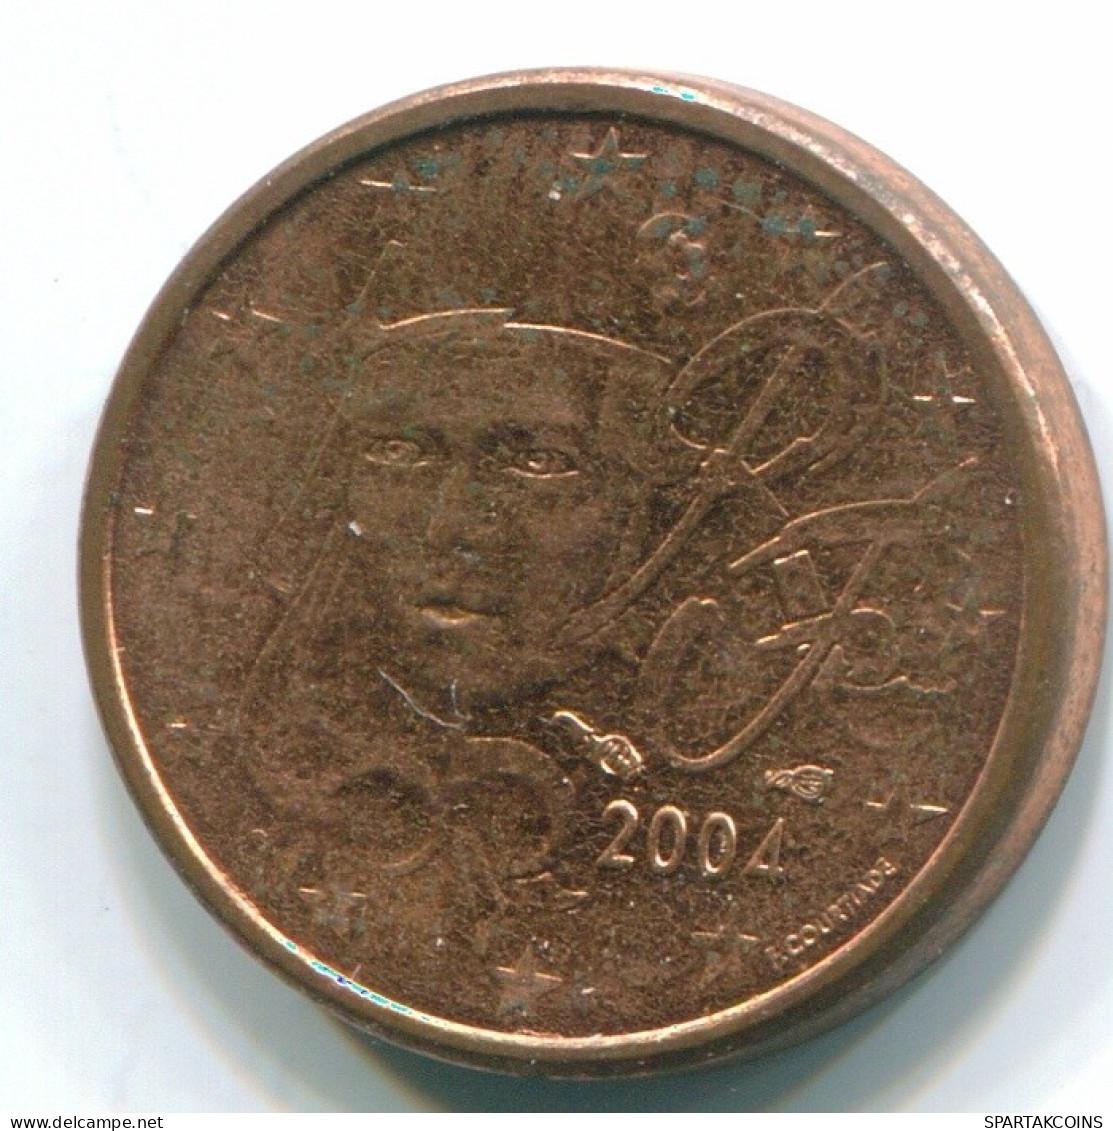 1 EURO CENT 2004 FRANKREICH FRANCE Französisch Münze UNC #FR1236.1.D.A - France